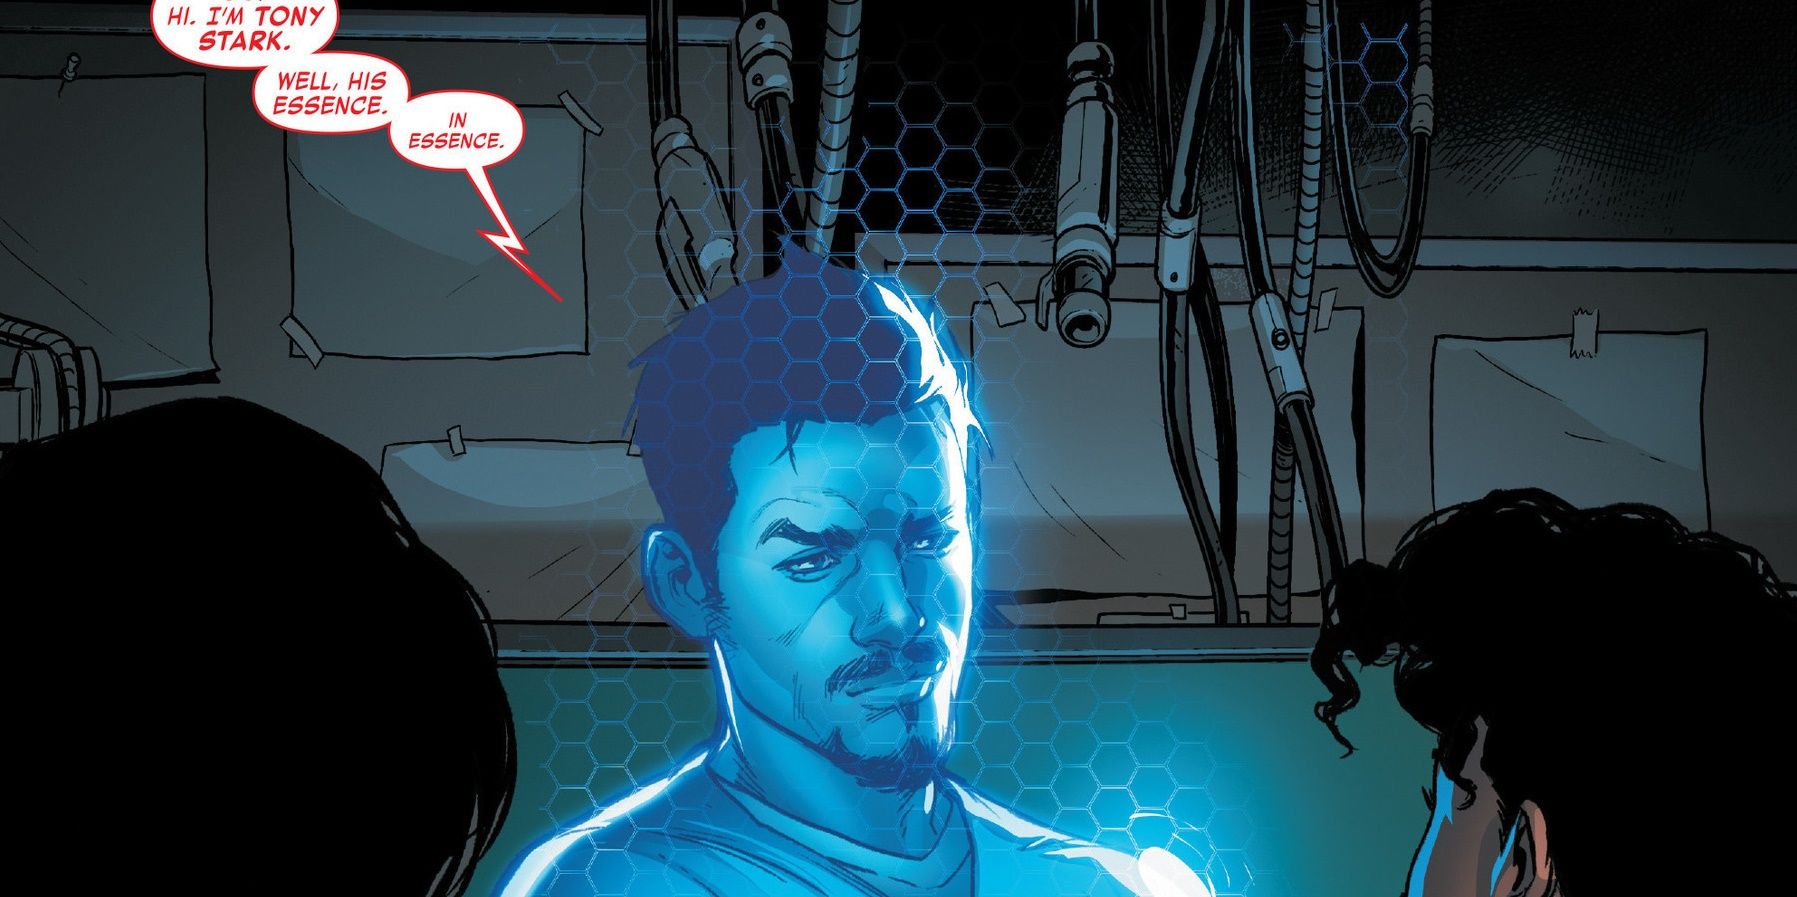 Tony Stark Plays Sidekick to Marvel's New Iron Man